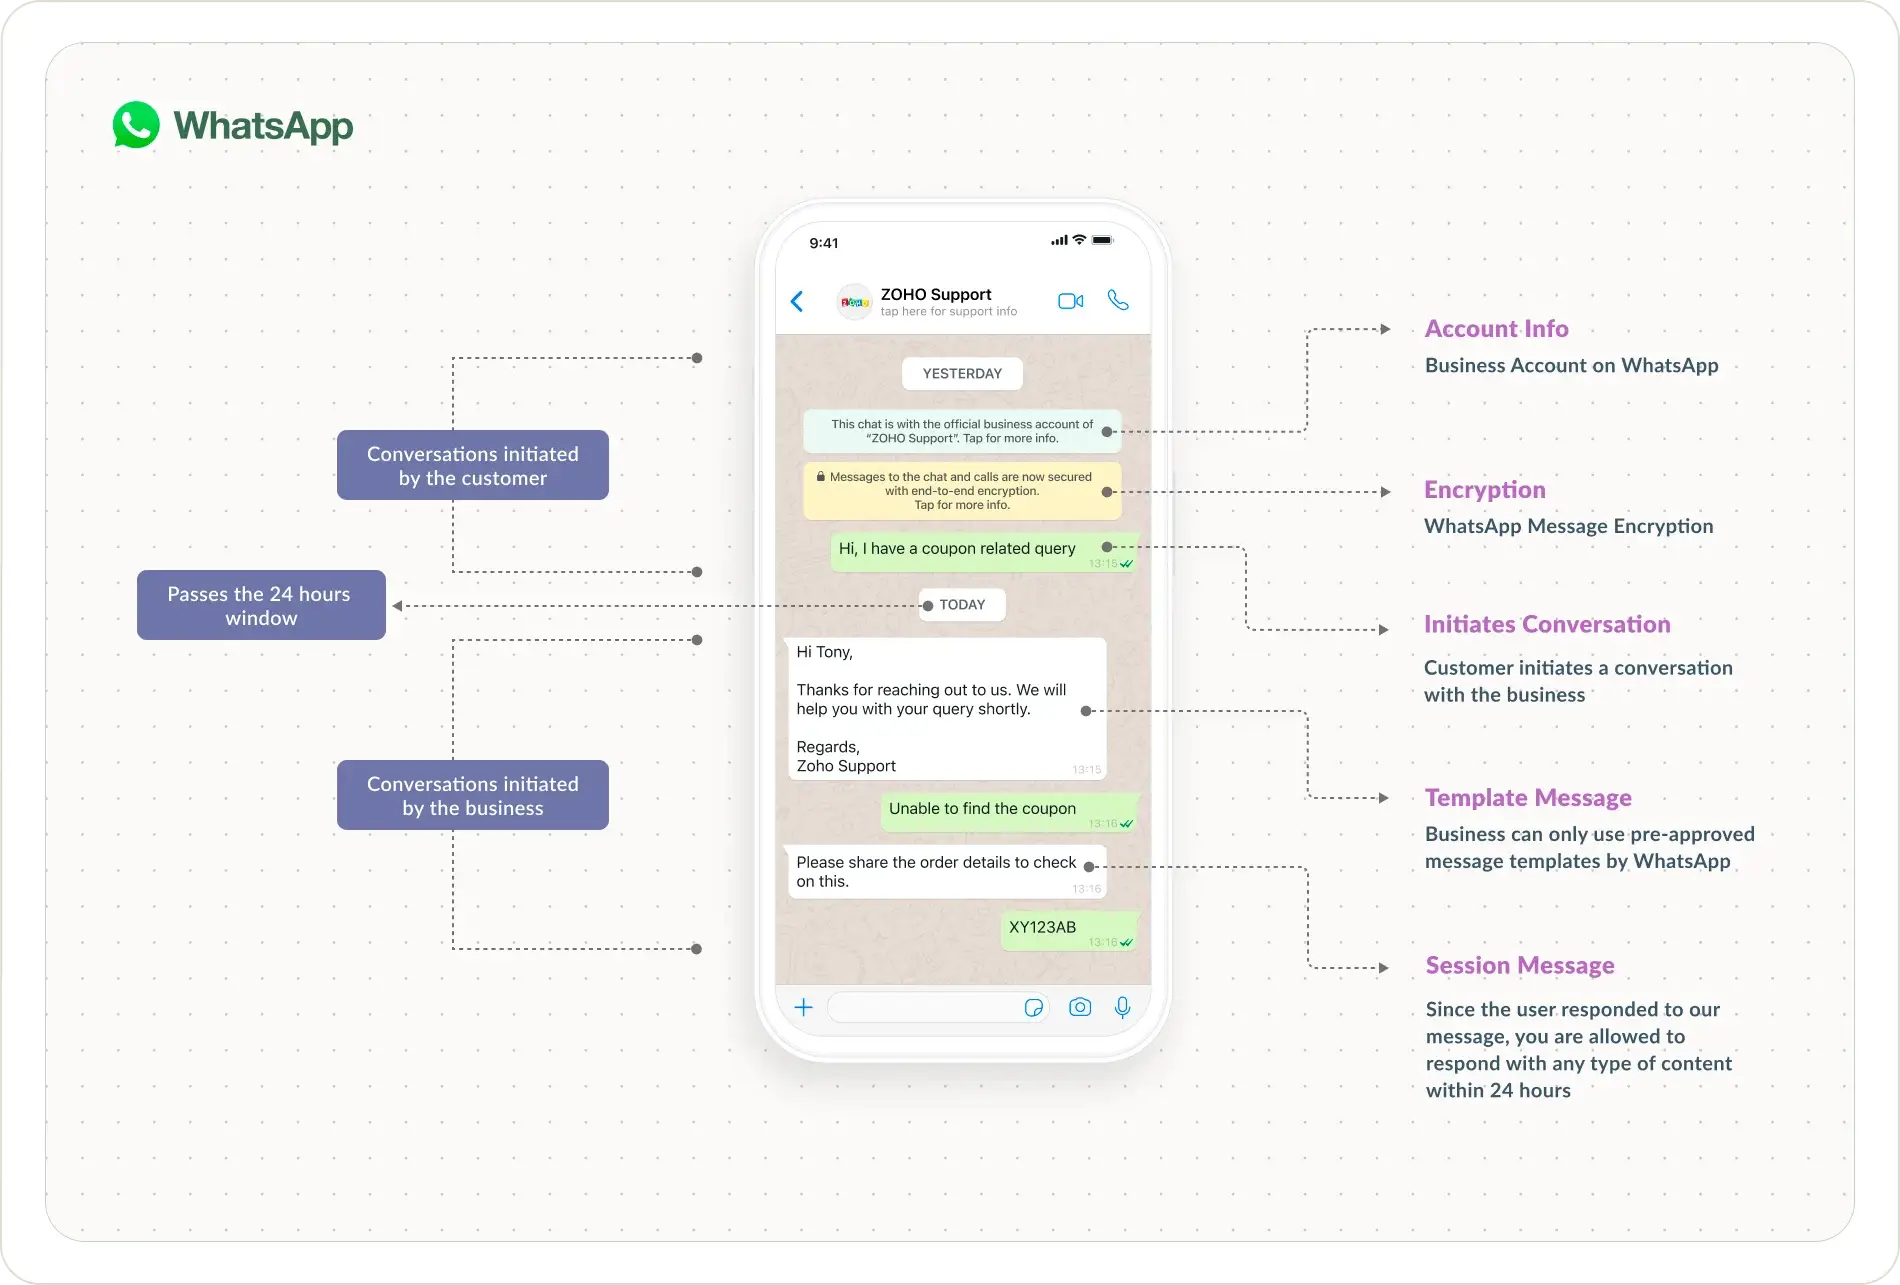 Understanding WhatsApp Messaging Templates